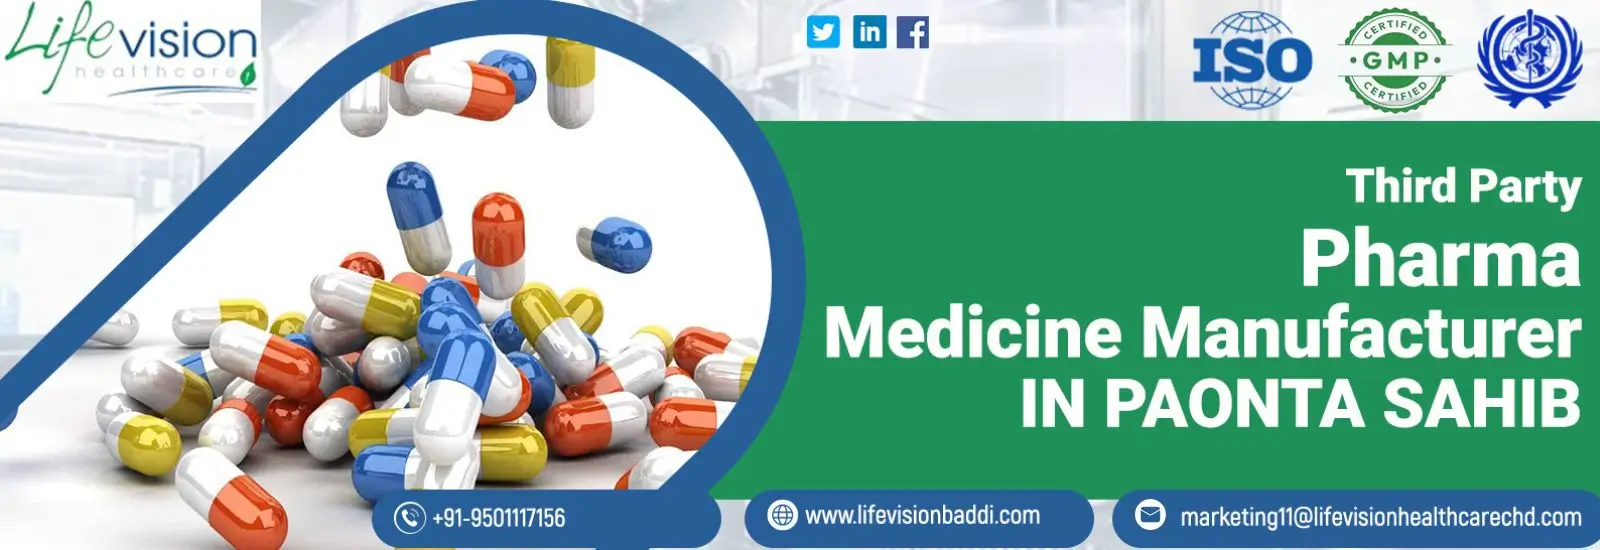 Top Pharma Medicine Manufacturing Company in Paonta Sahib | Lifevision Healthcare